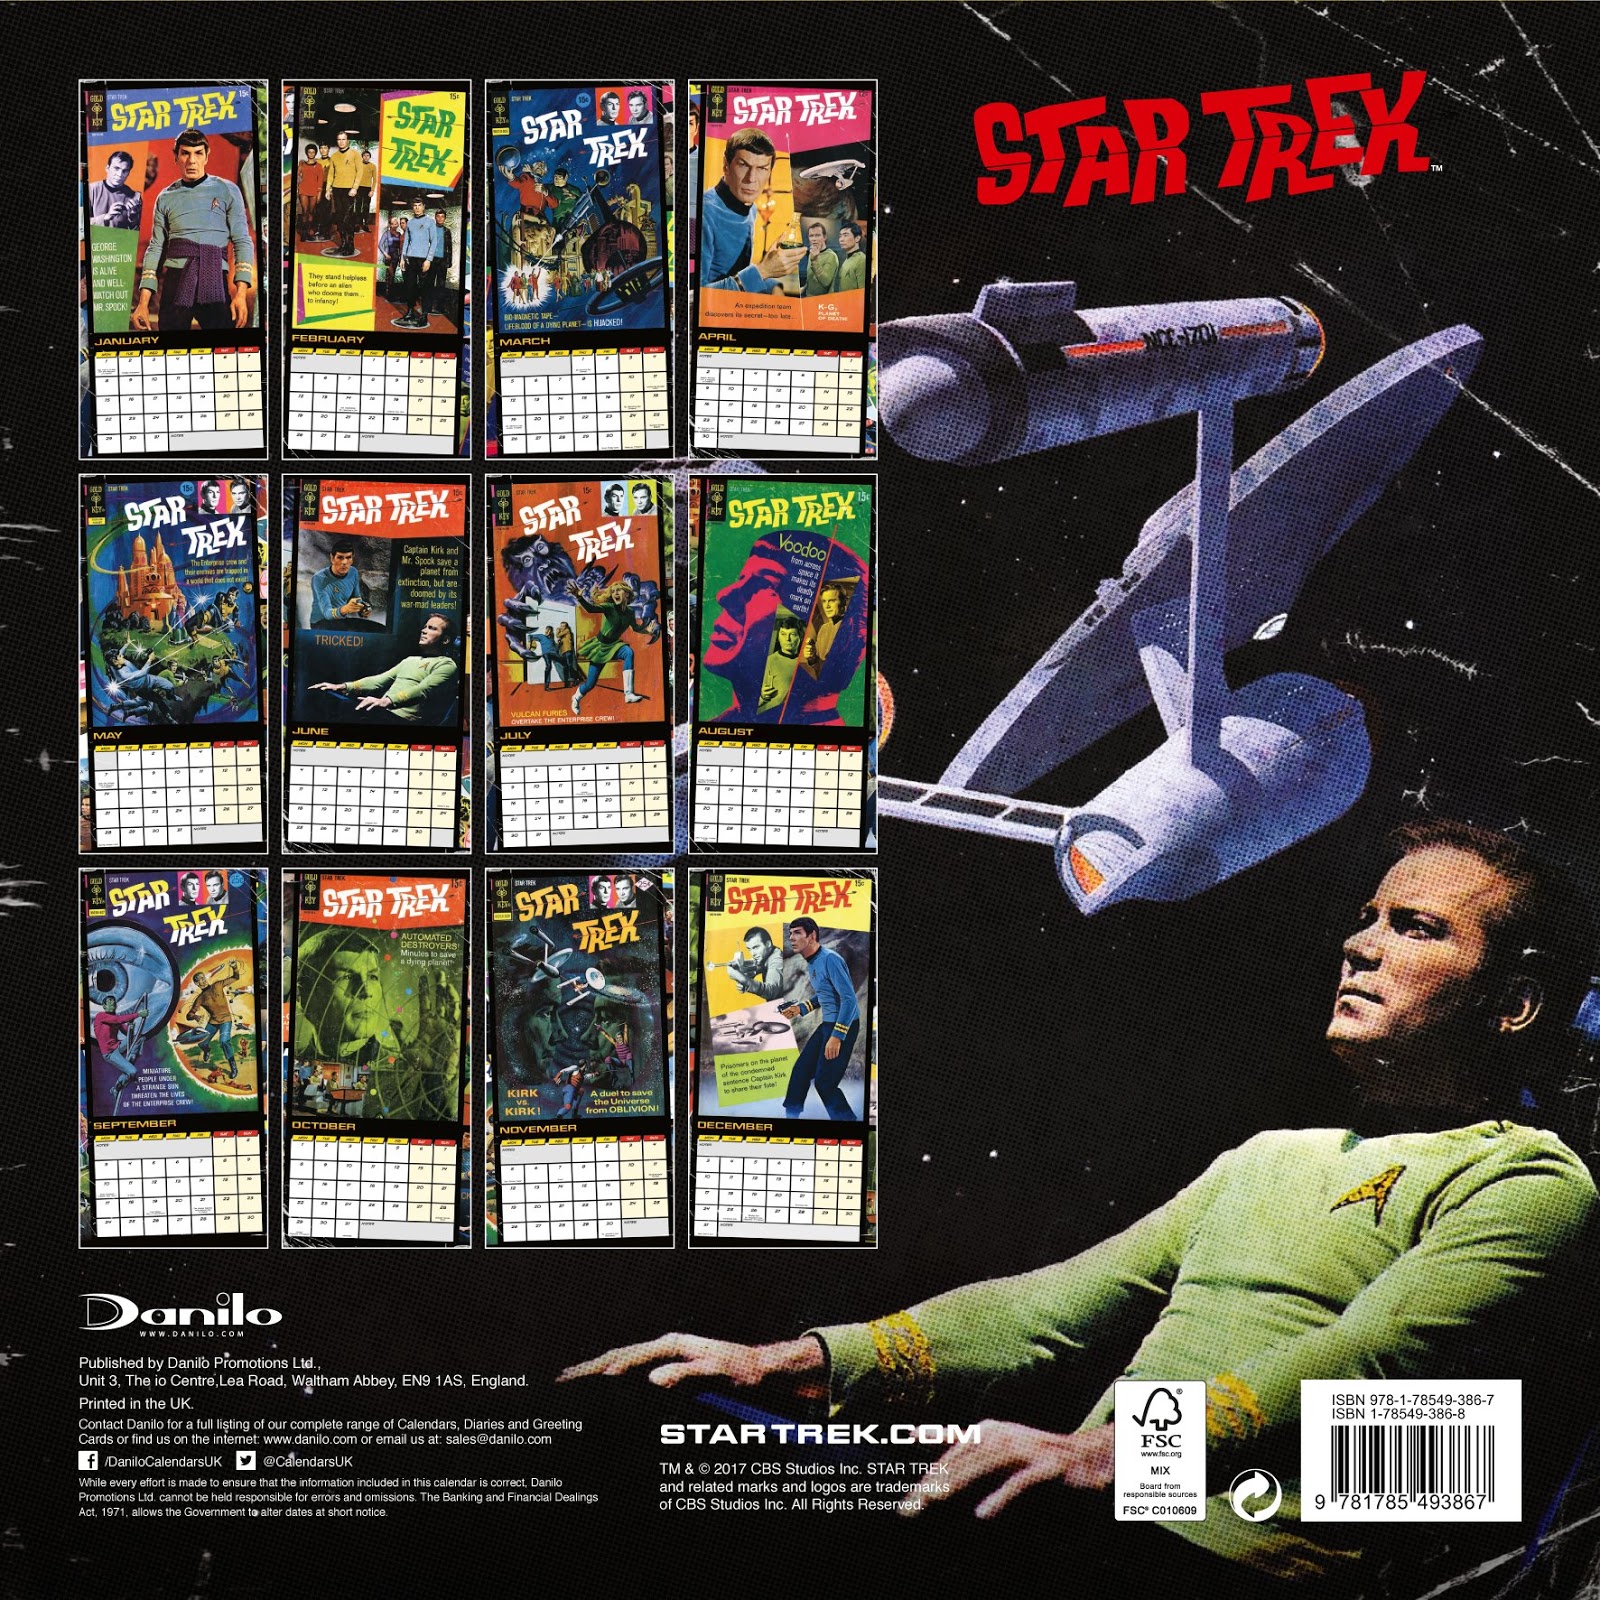 The Trek Collective Danilo's 2018 Star Trek calendars, including